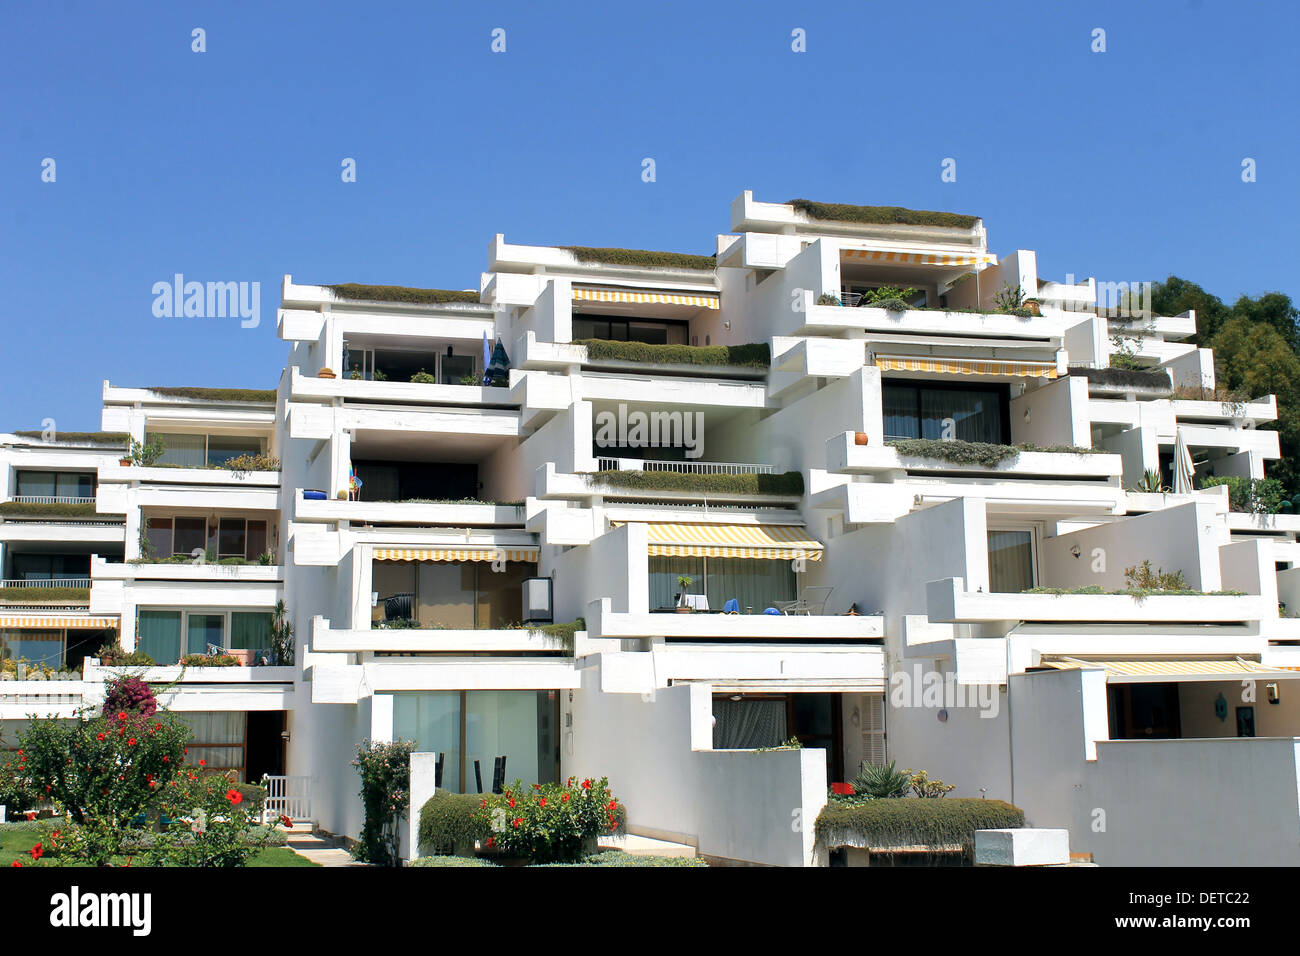 Holiday apartment buildings on island of Majorca, Spain. Stock Photo